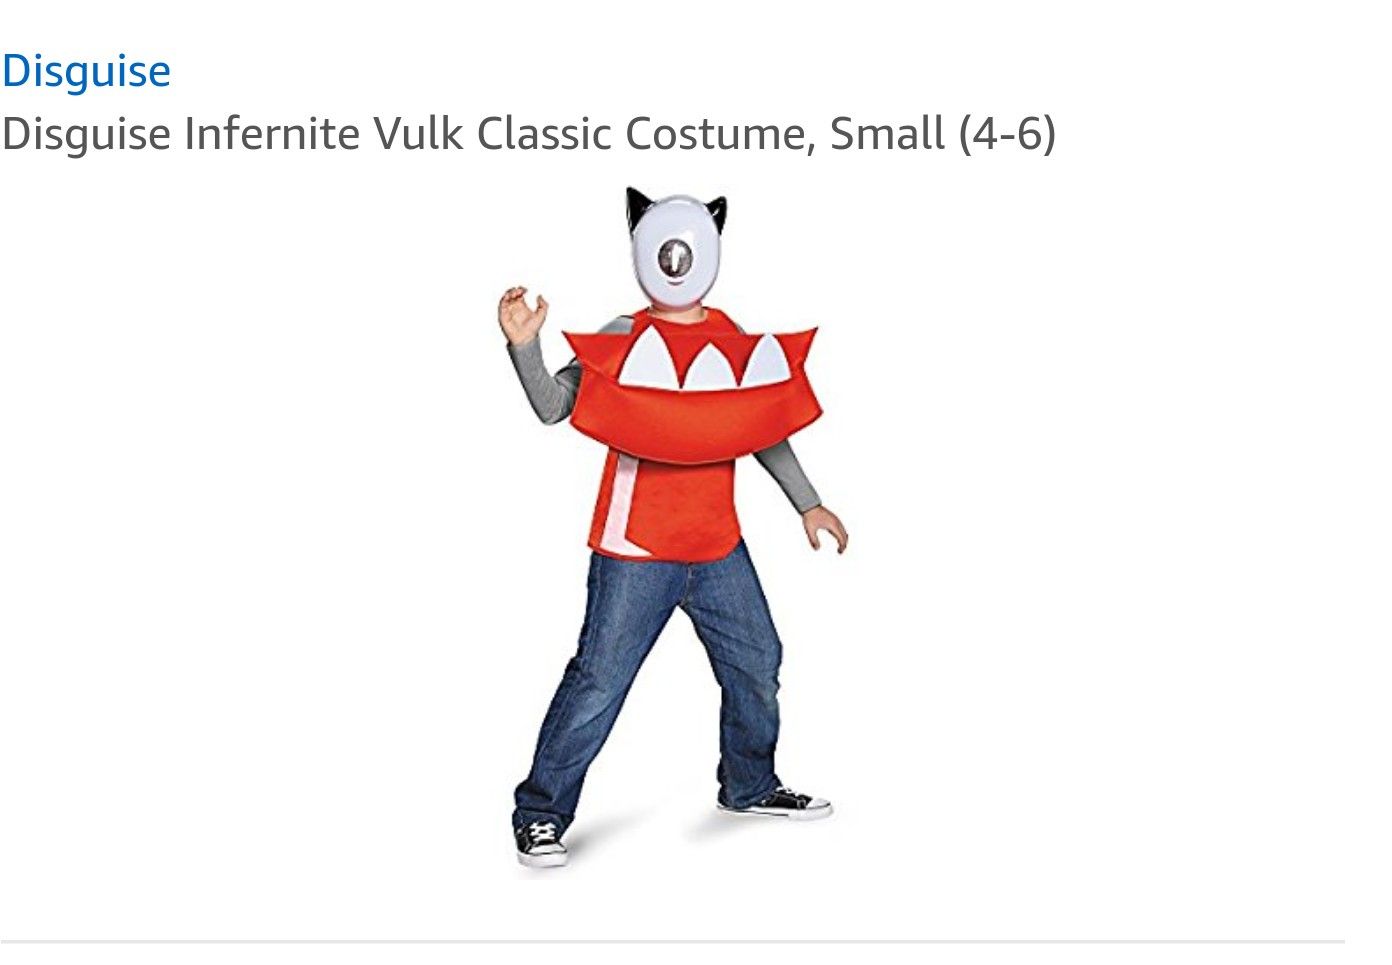 Brand New boys size S(5-6) Halloween costume infernite vulk